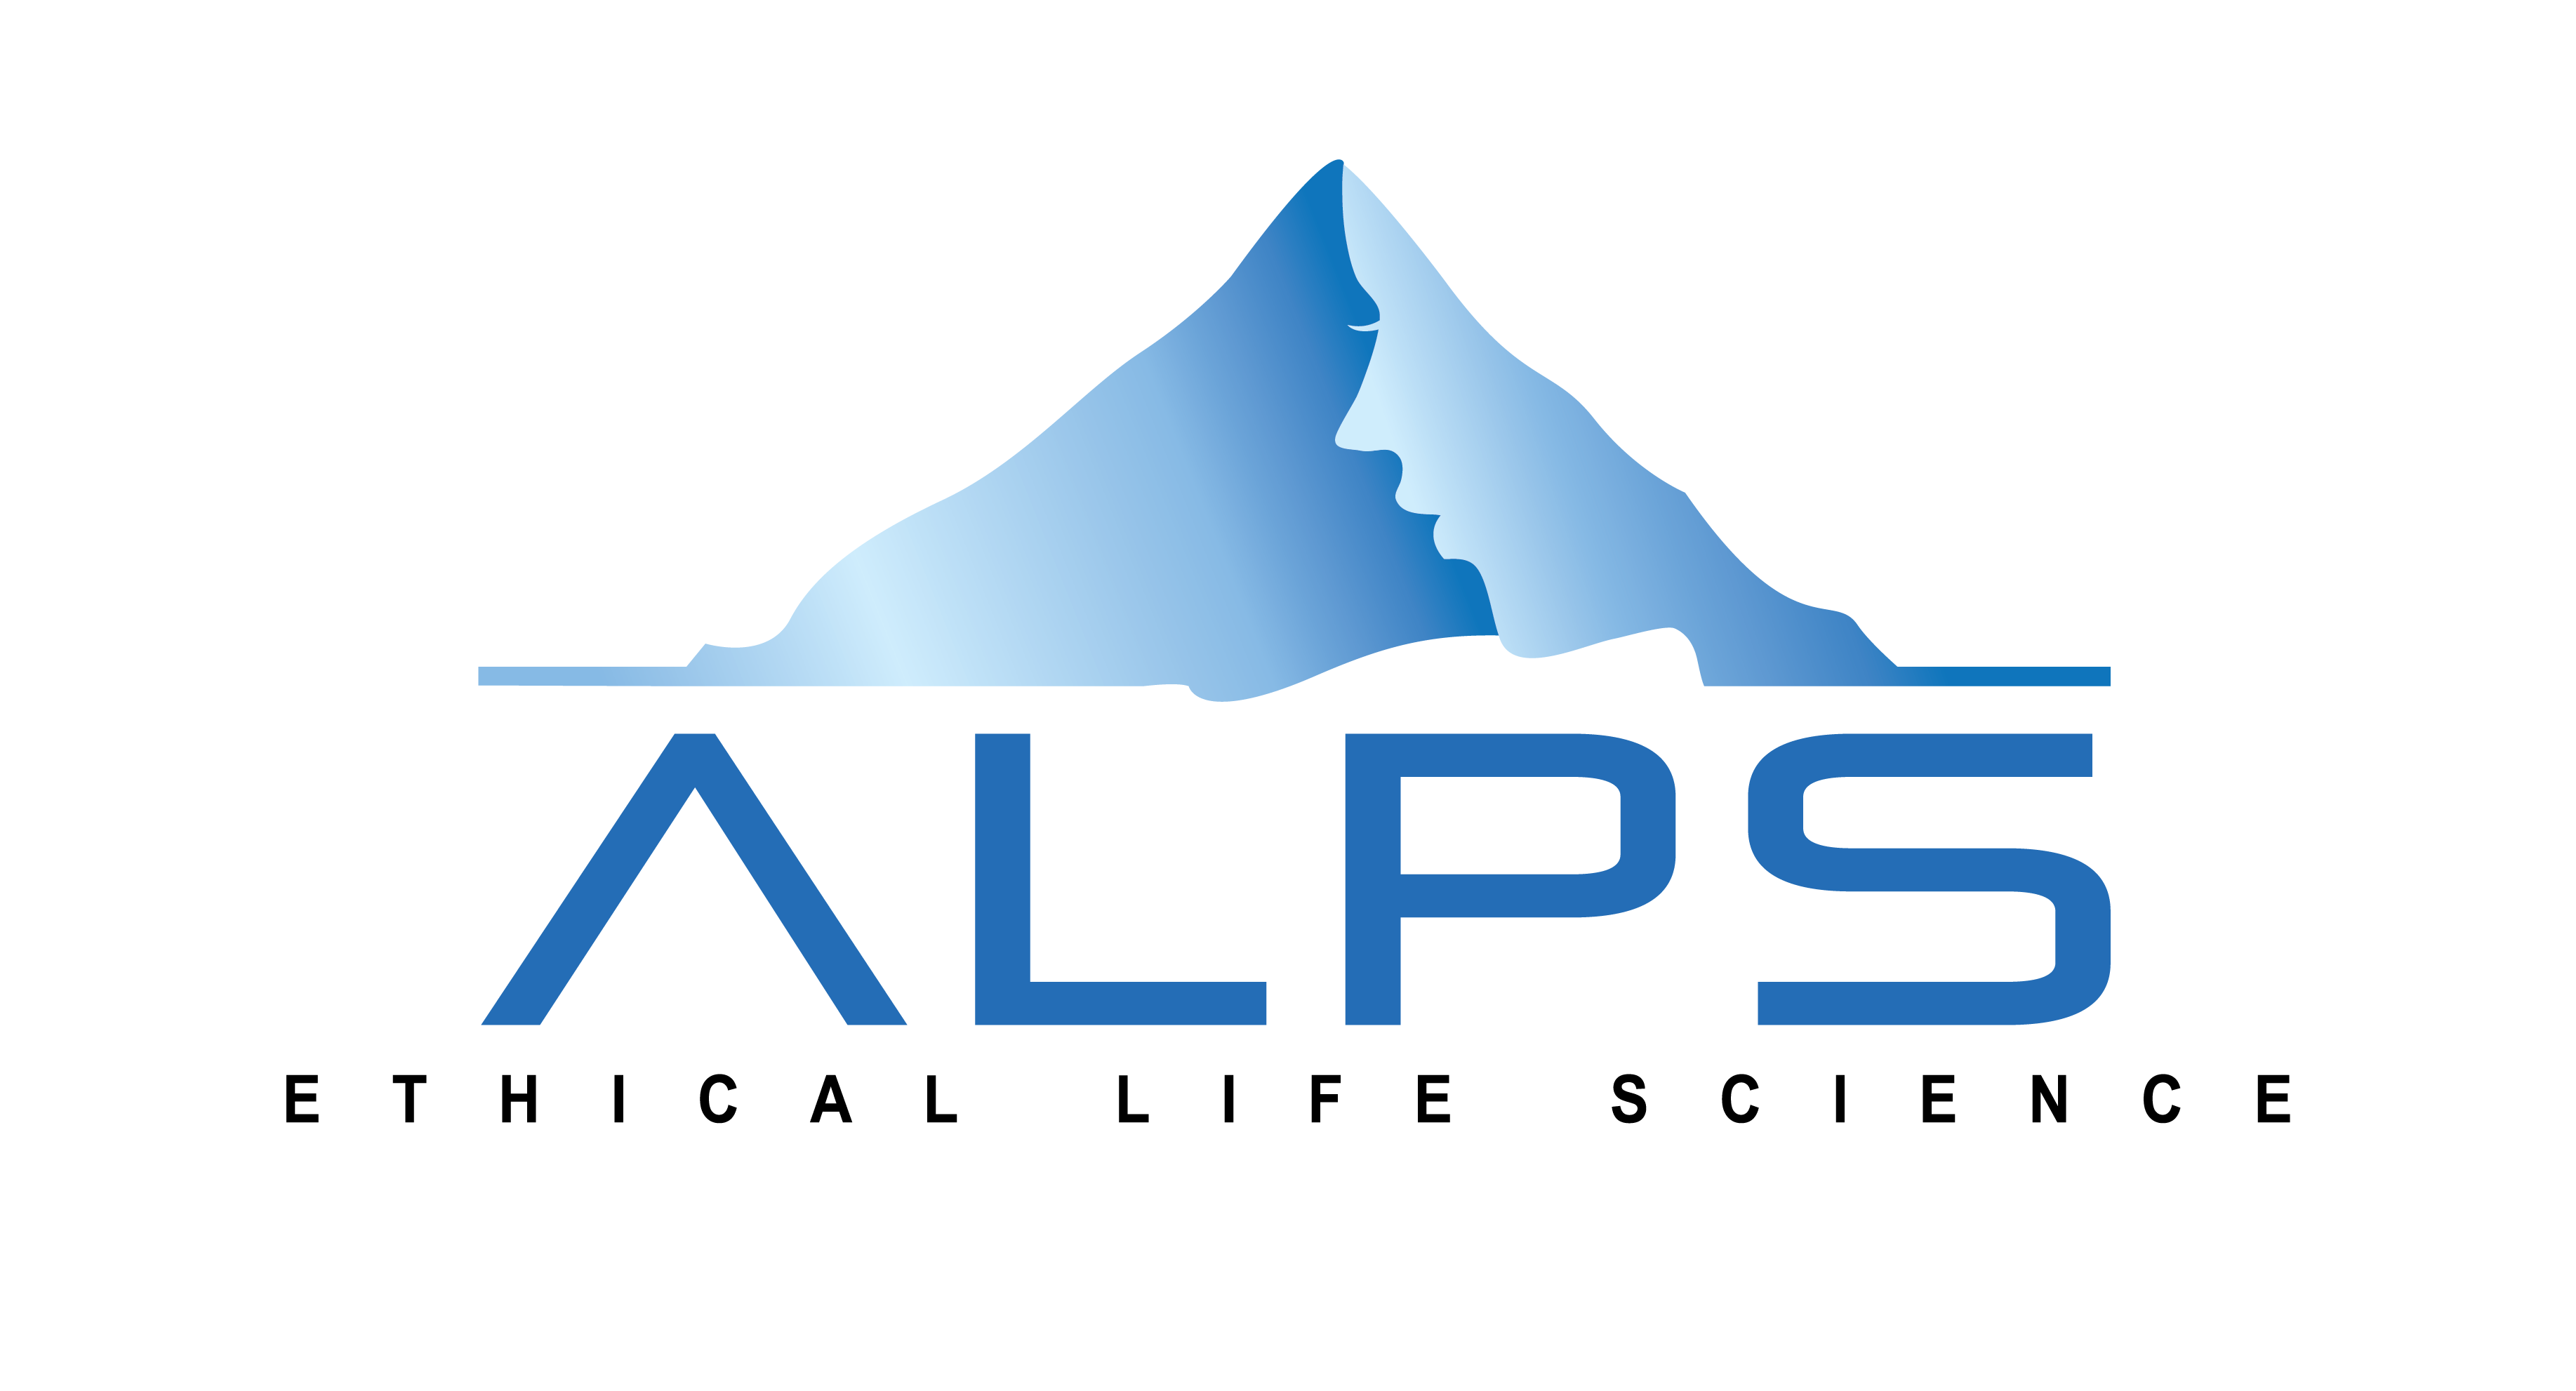 Alps Global